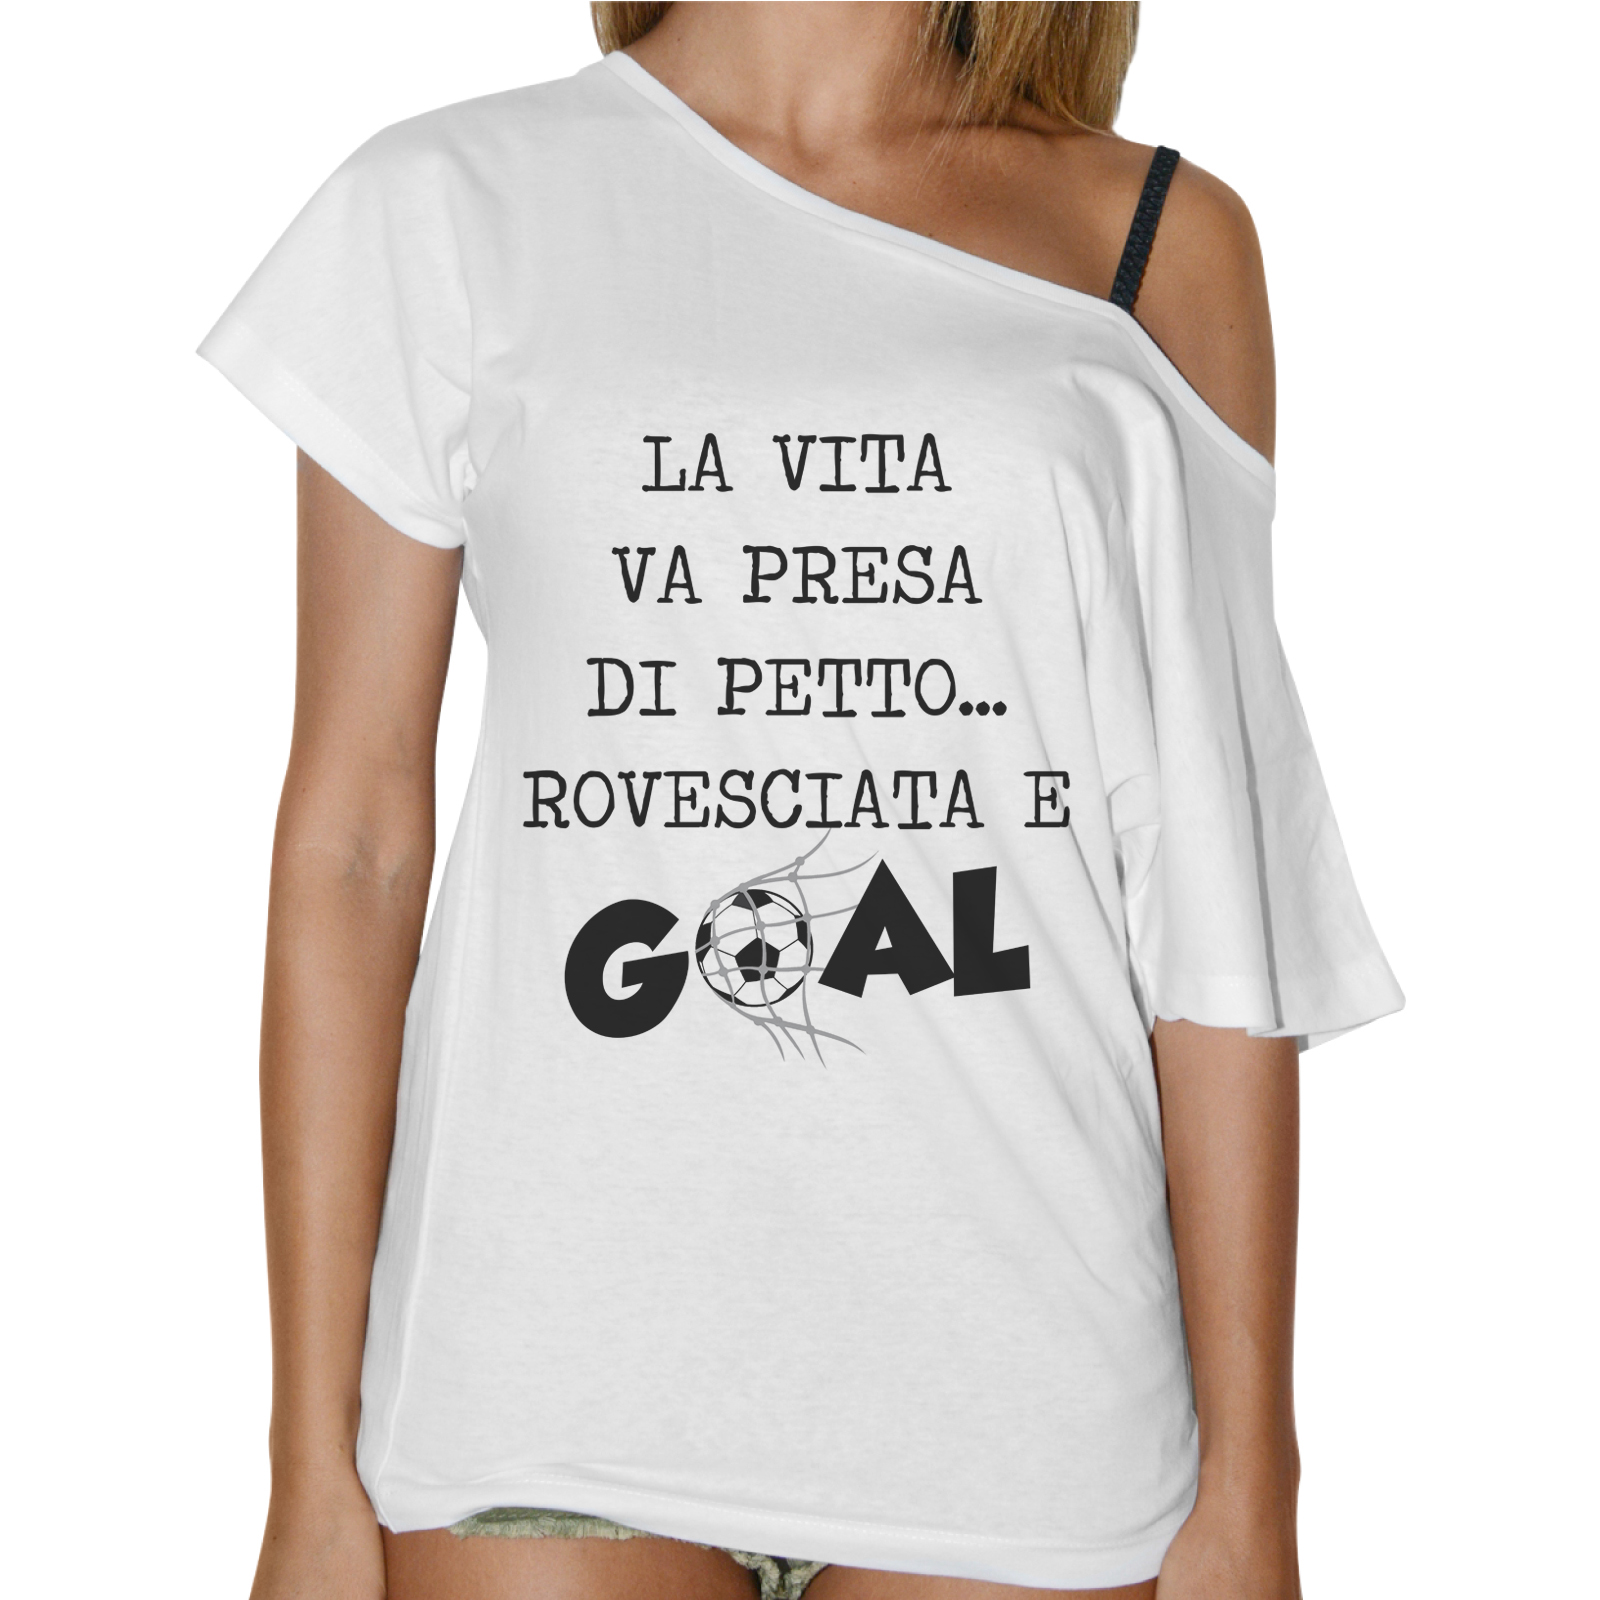 T-Shirt Donna Collo Barca PETTO ROVESCIATA GOAL